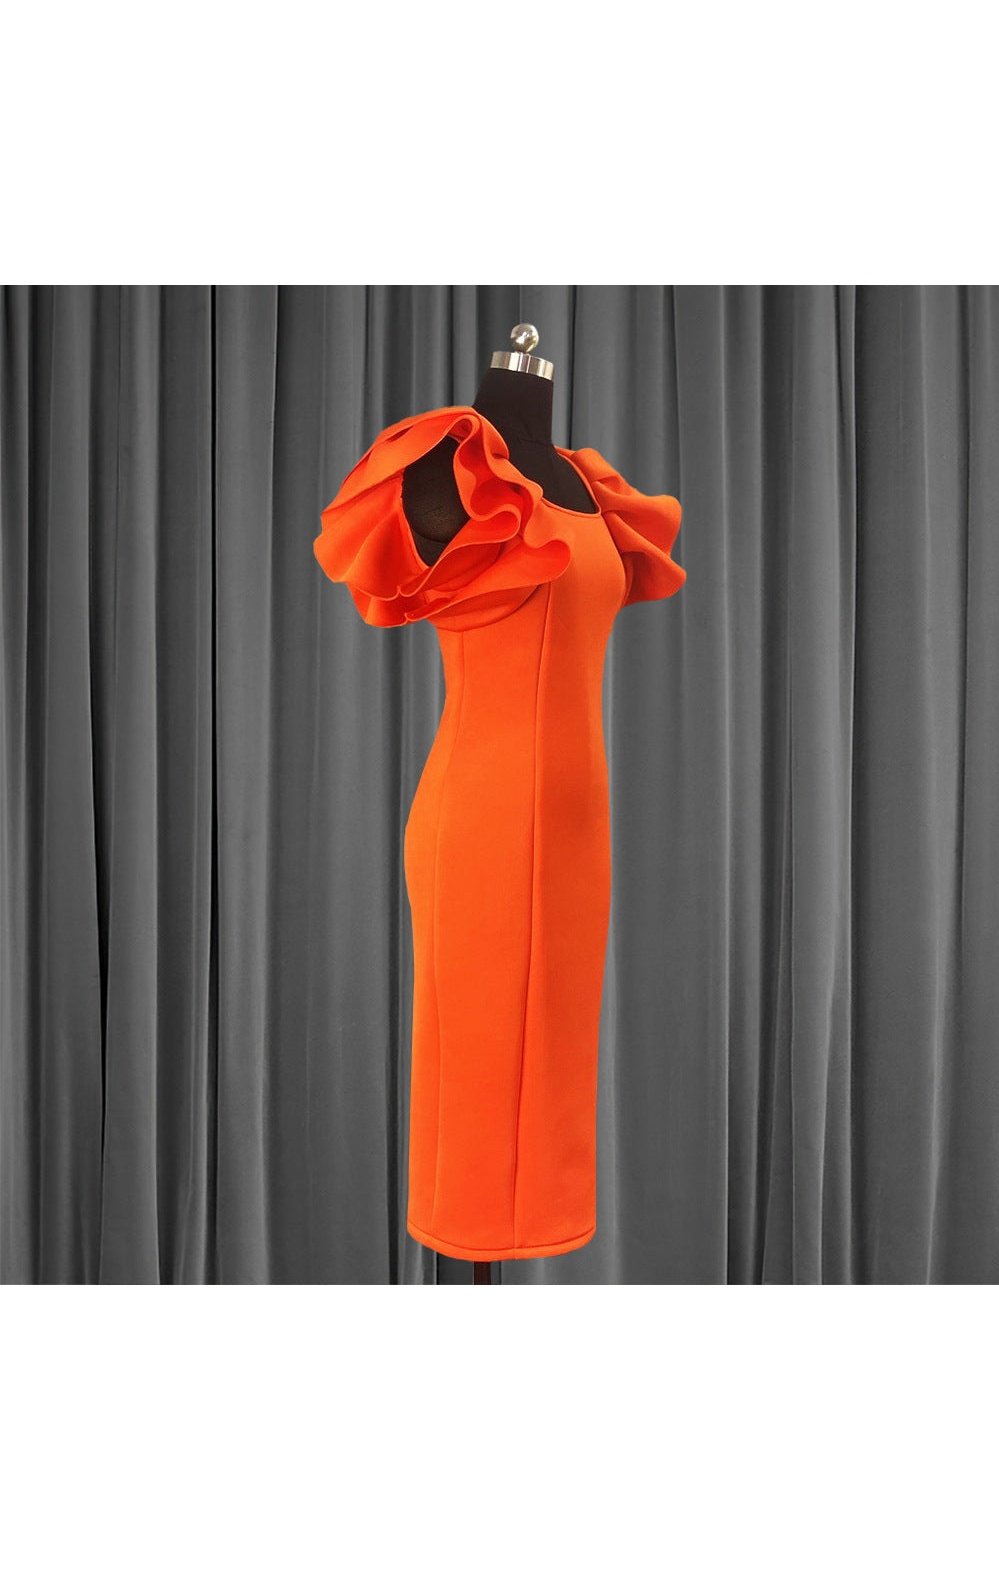 Orange Ruffle Shoulder  Elegant Dress